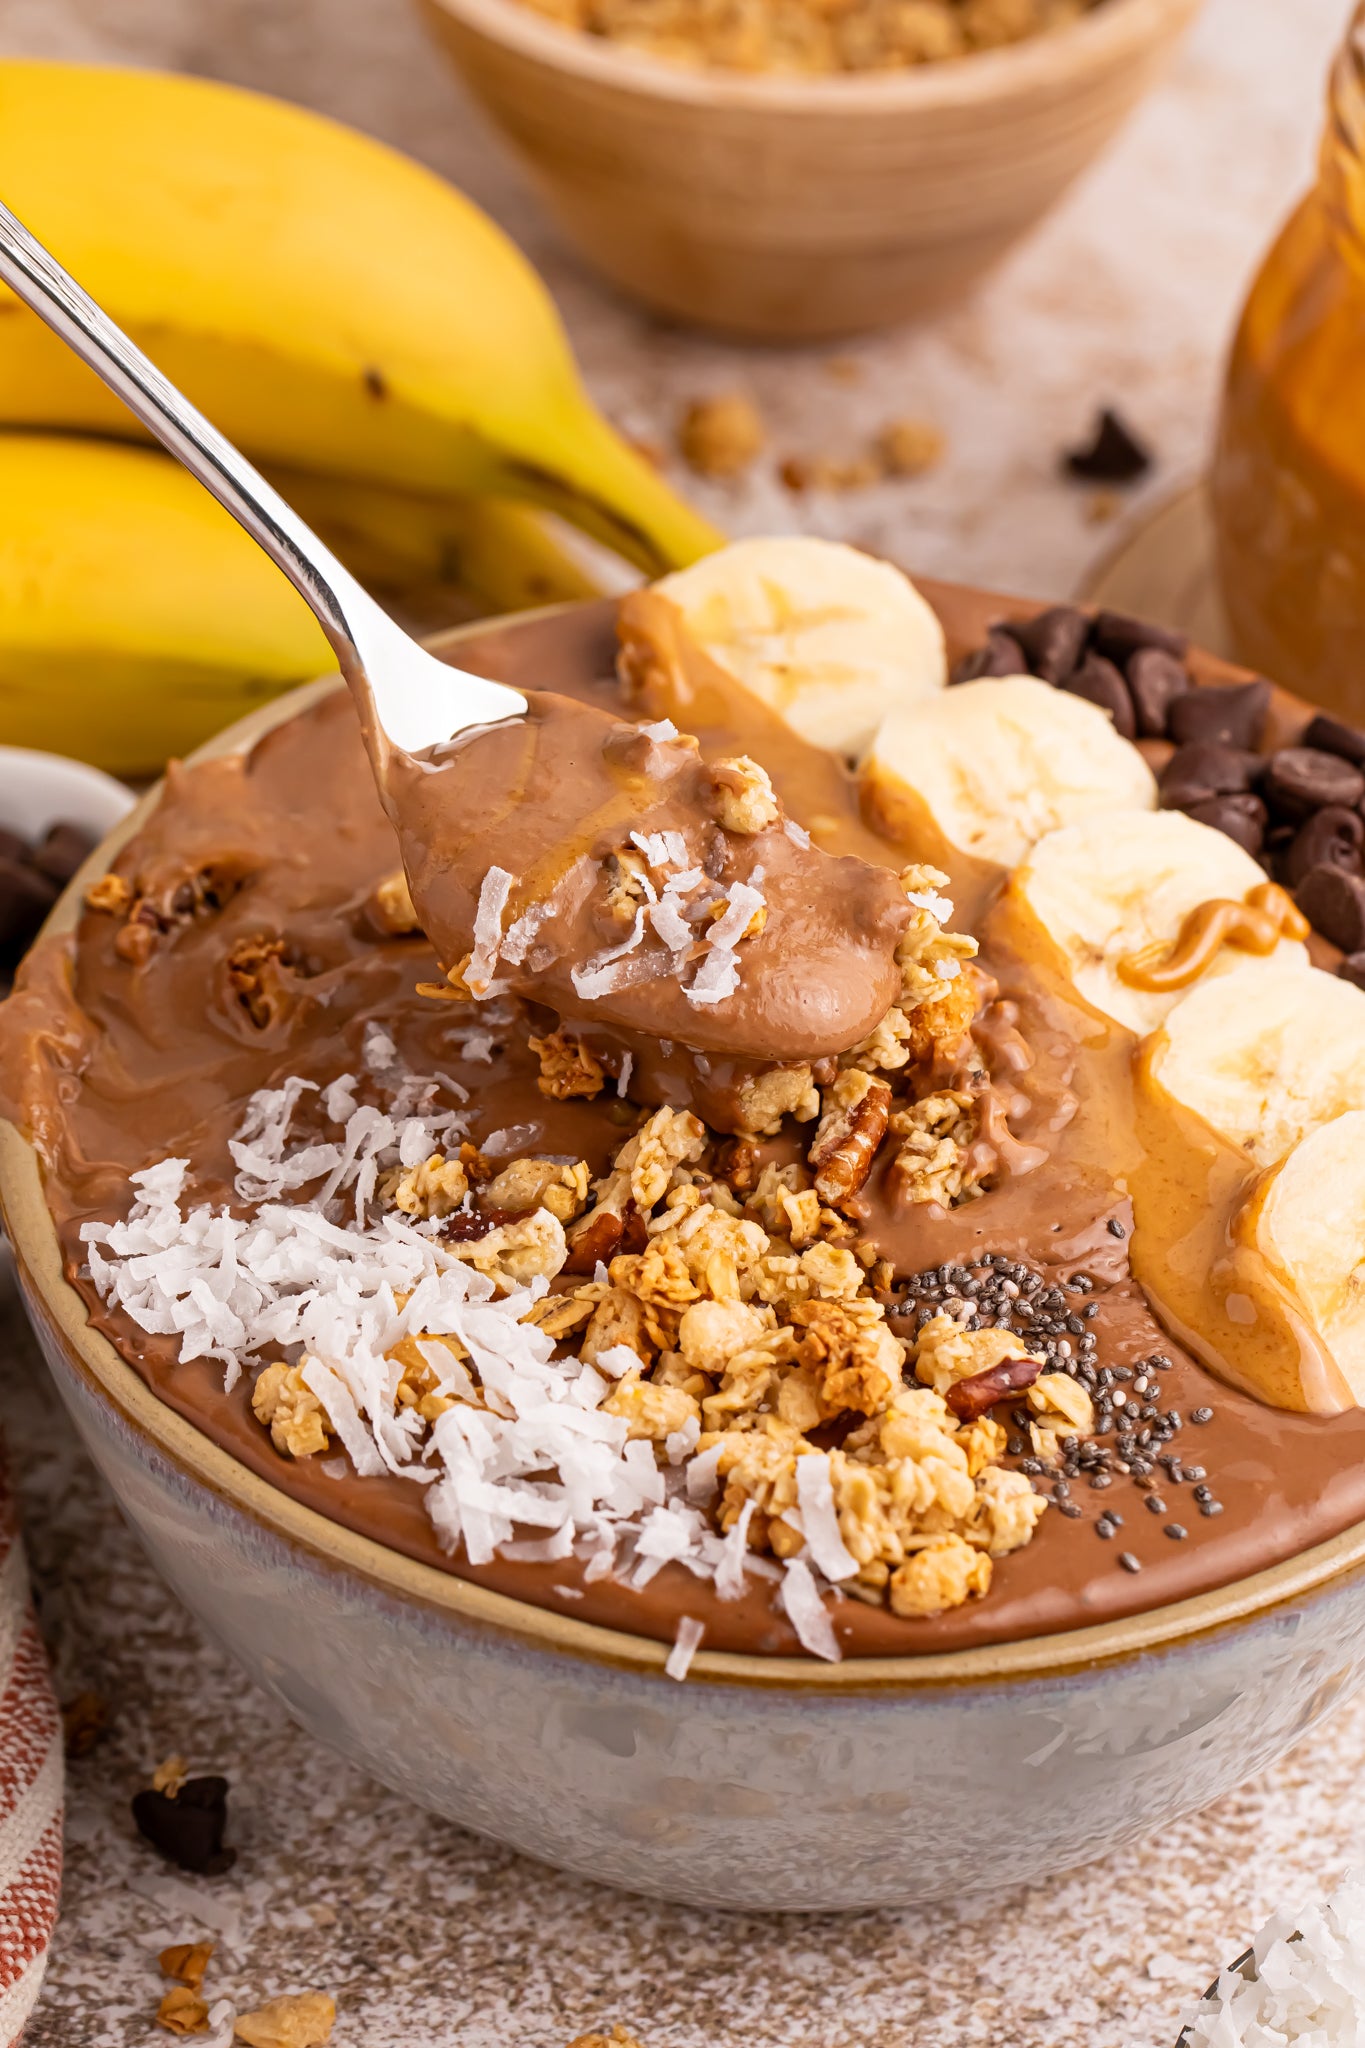 x SALE! Chocolate PB Banana Smoothie Bowl - Exclusive Recipe